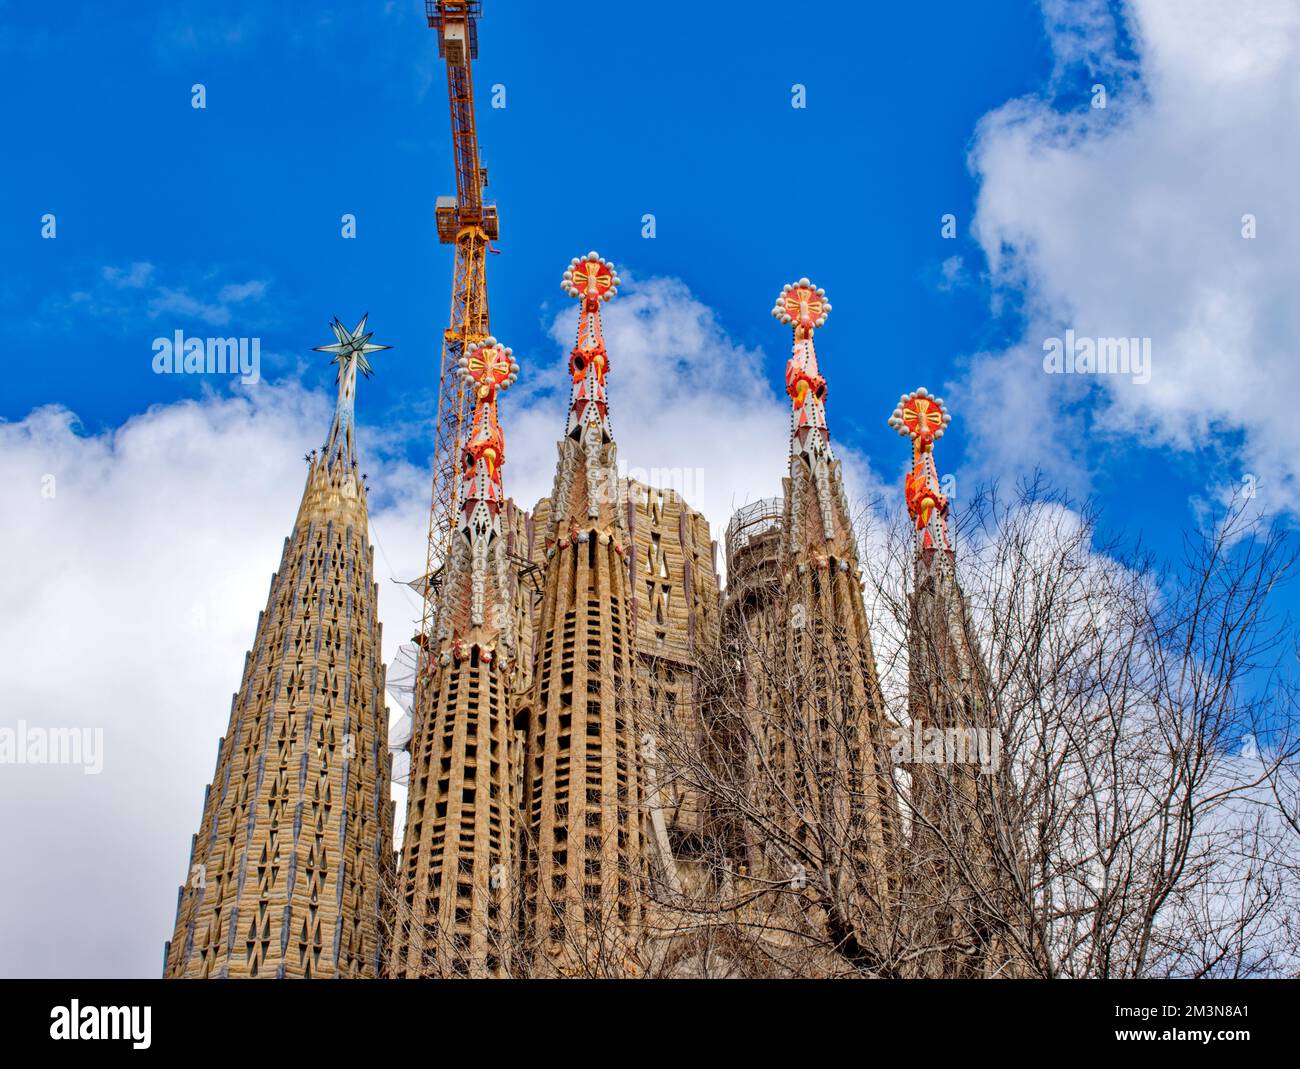 Basílica i Tempel Expiatori de la Sagrada Família und gelber Kran während des Baus der bunten Türme Stockfoto